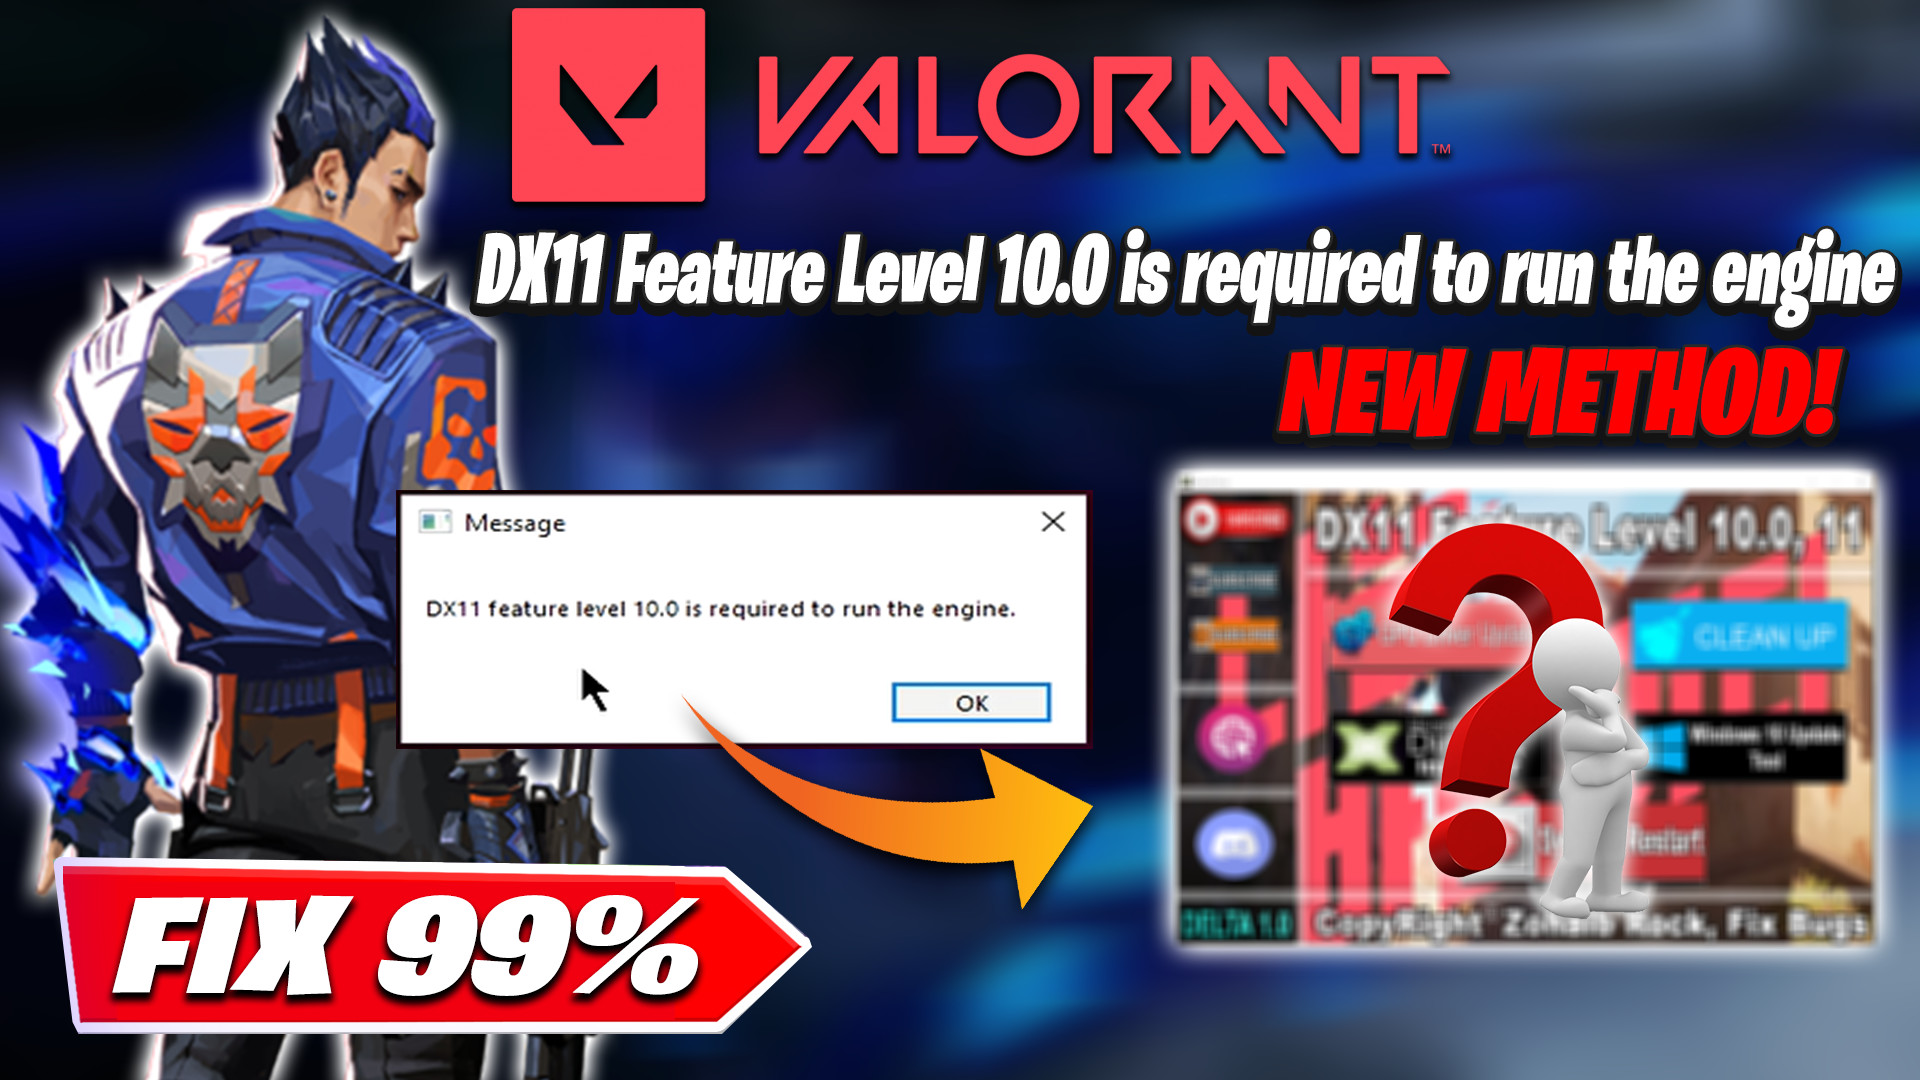 download dx11 feature level 10.0 valorant